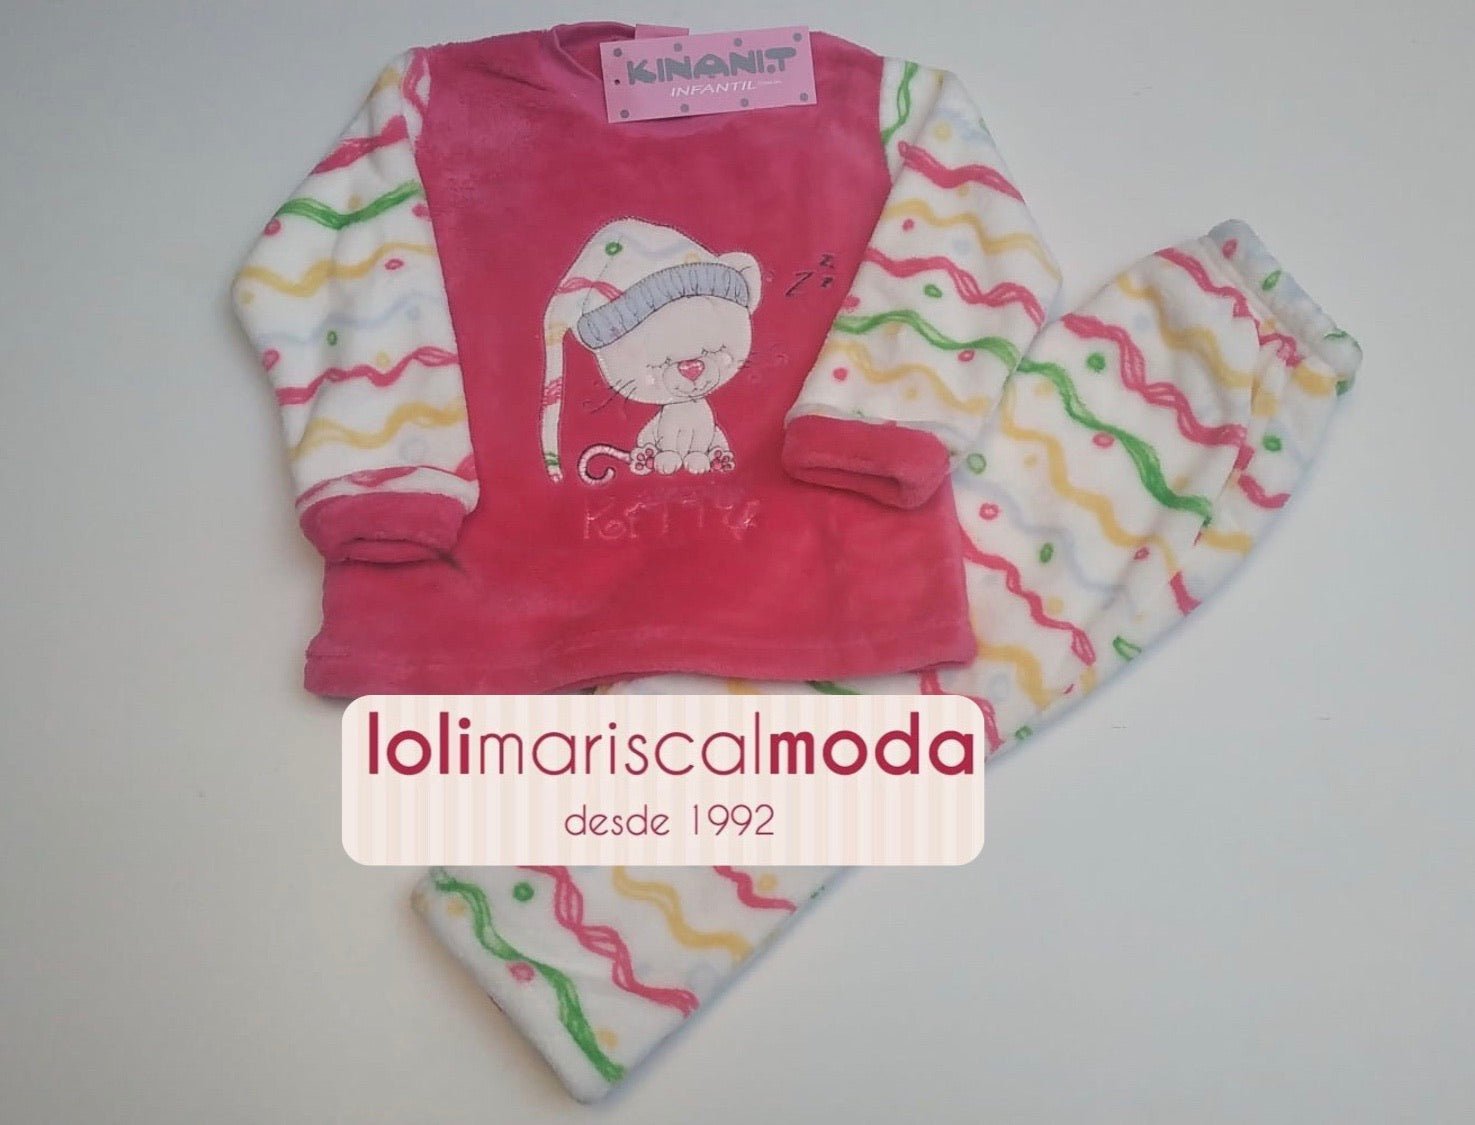 Pijama Invierno niña Oso gorro lolimariscalmoda 12.95